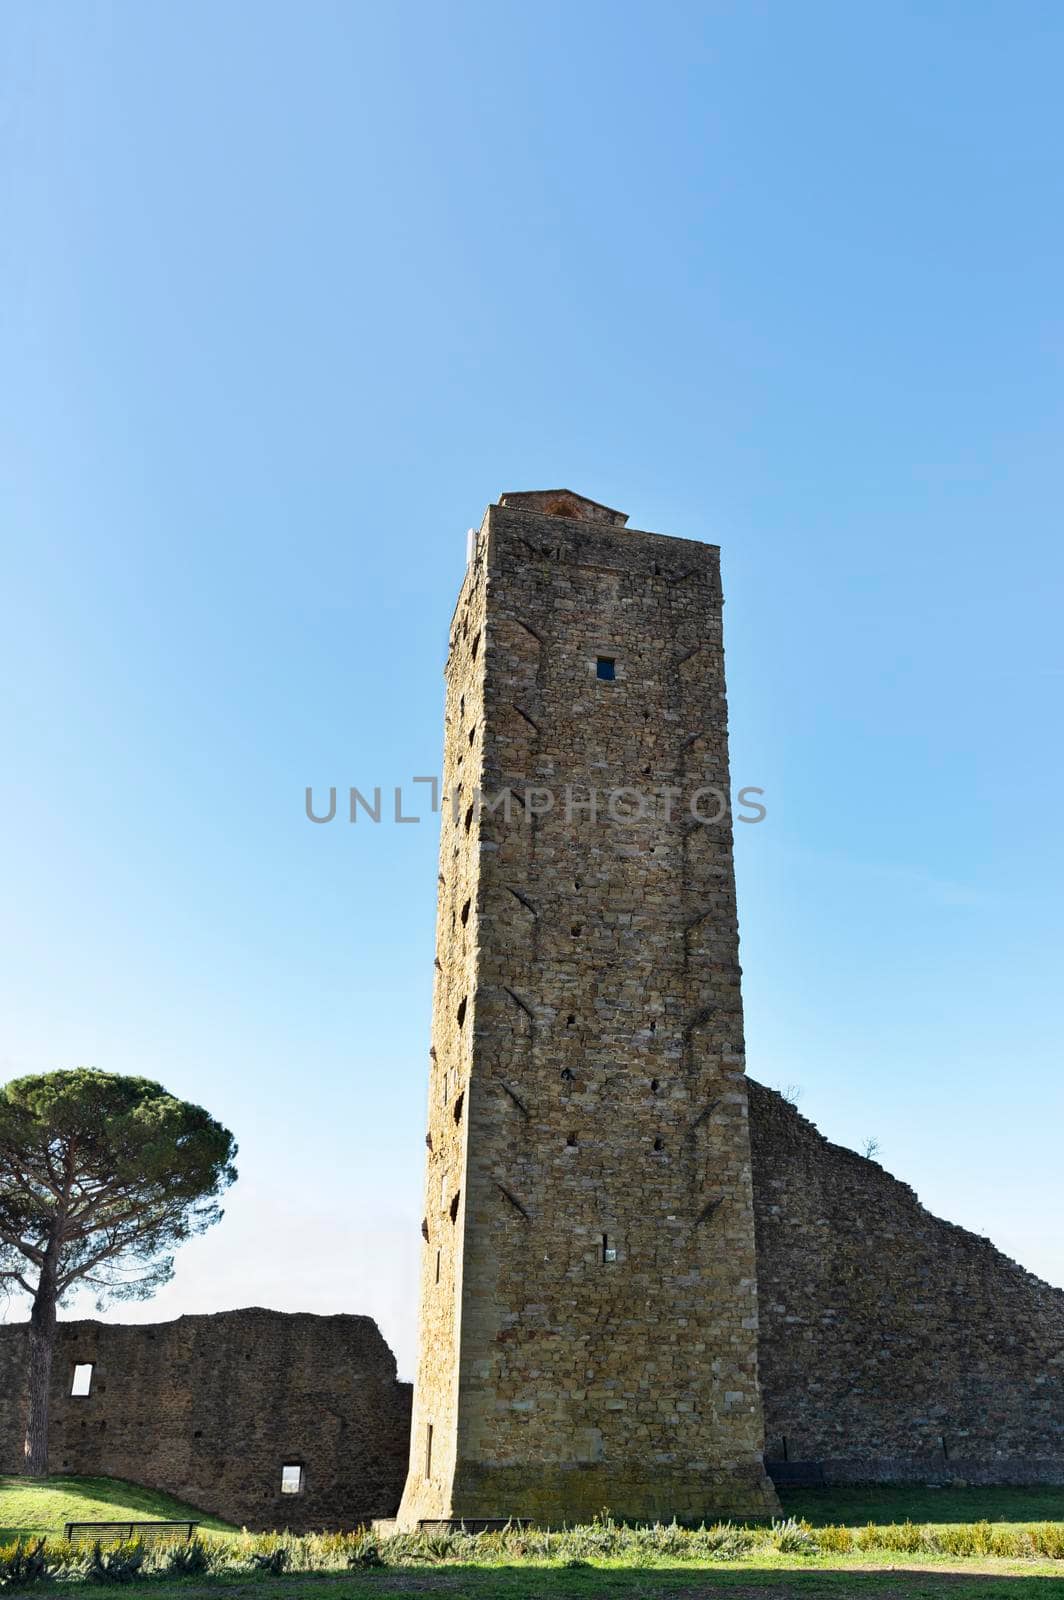 Defensive tower in Castiglion Fiorentino ,Italy by victimewalker